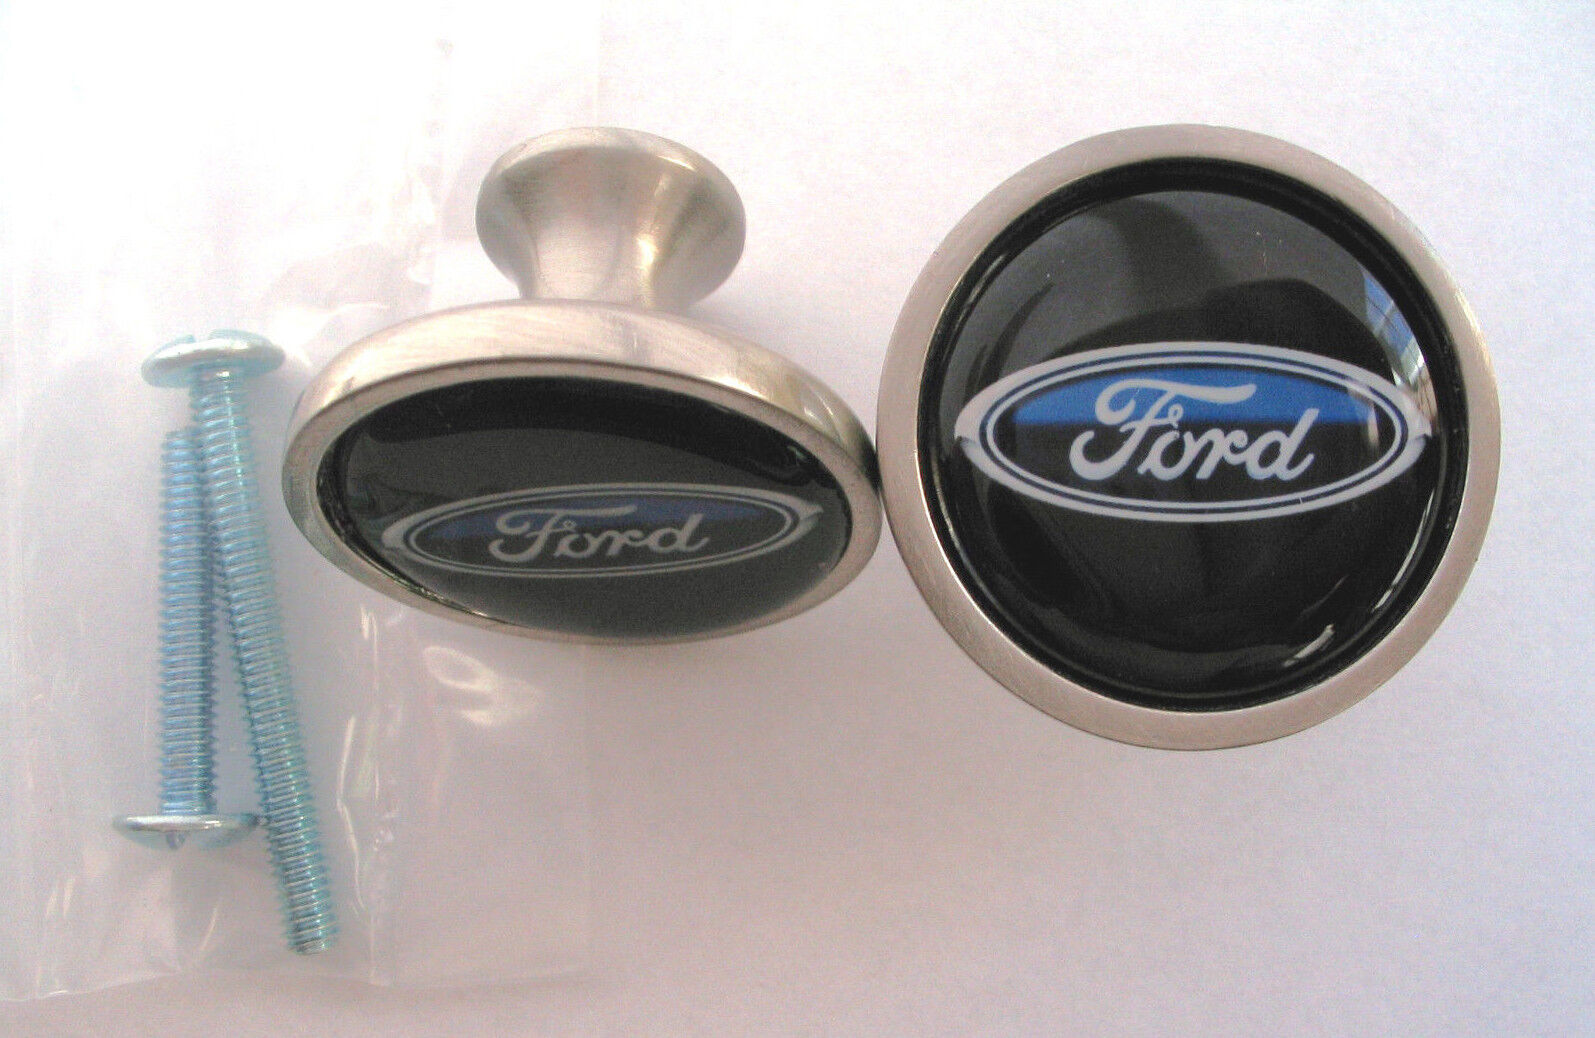 Ford Cabinet Knobs, Ford Logo Cabinet Knobs, Ford Car Cabinet Knobs, Auto Без бренда